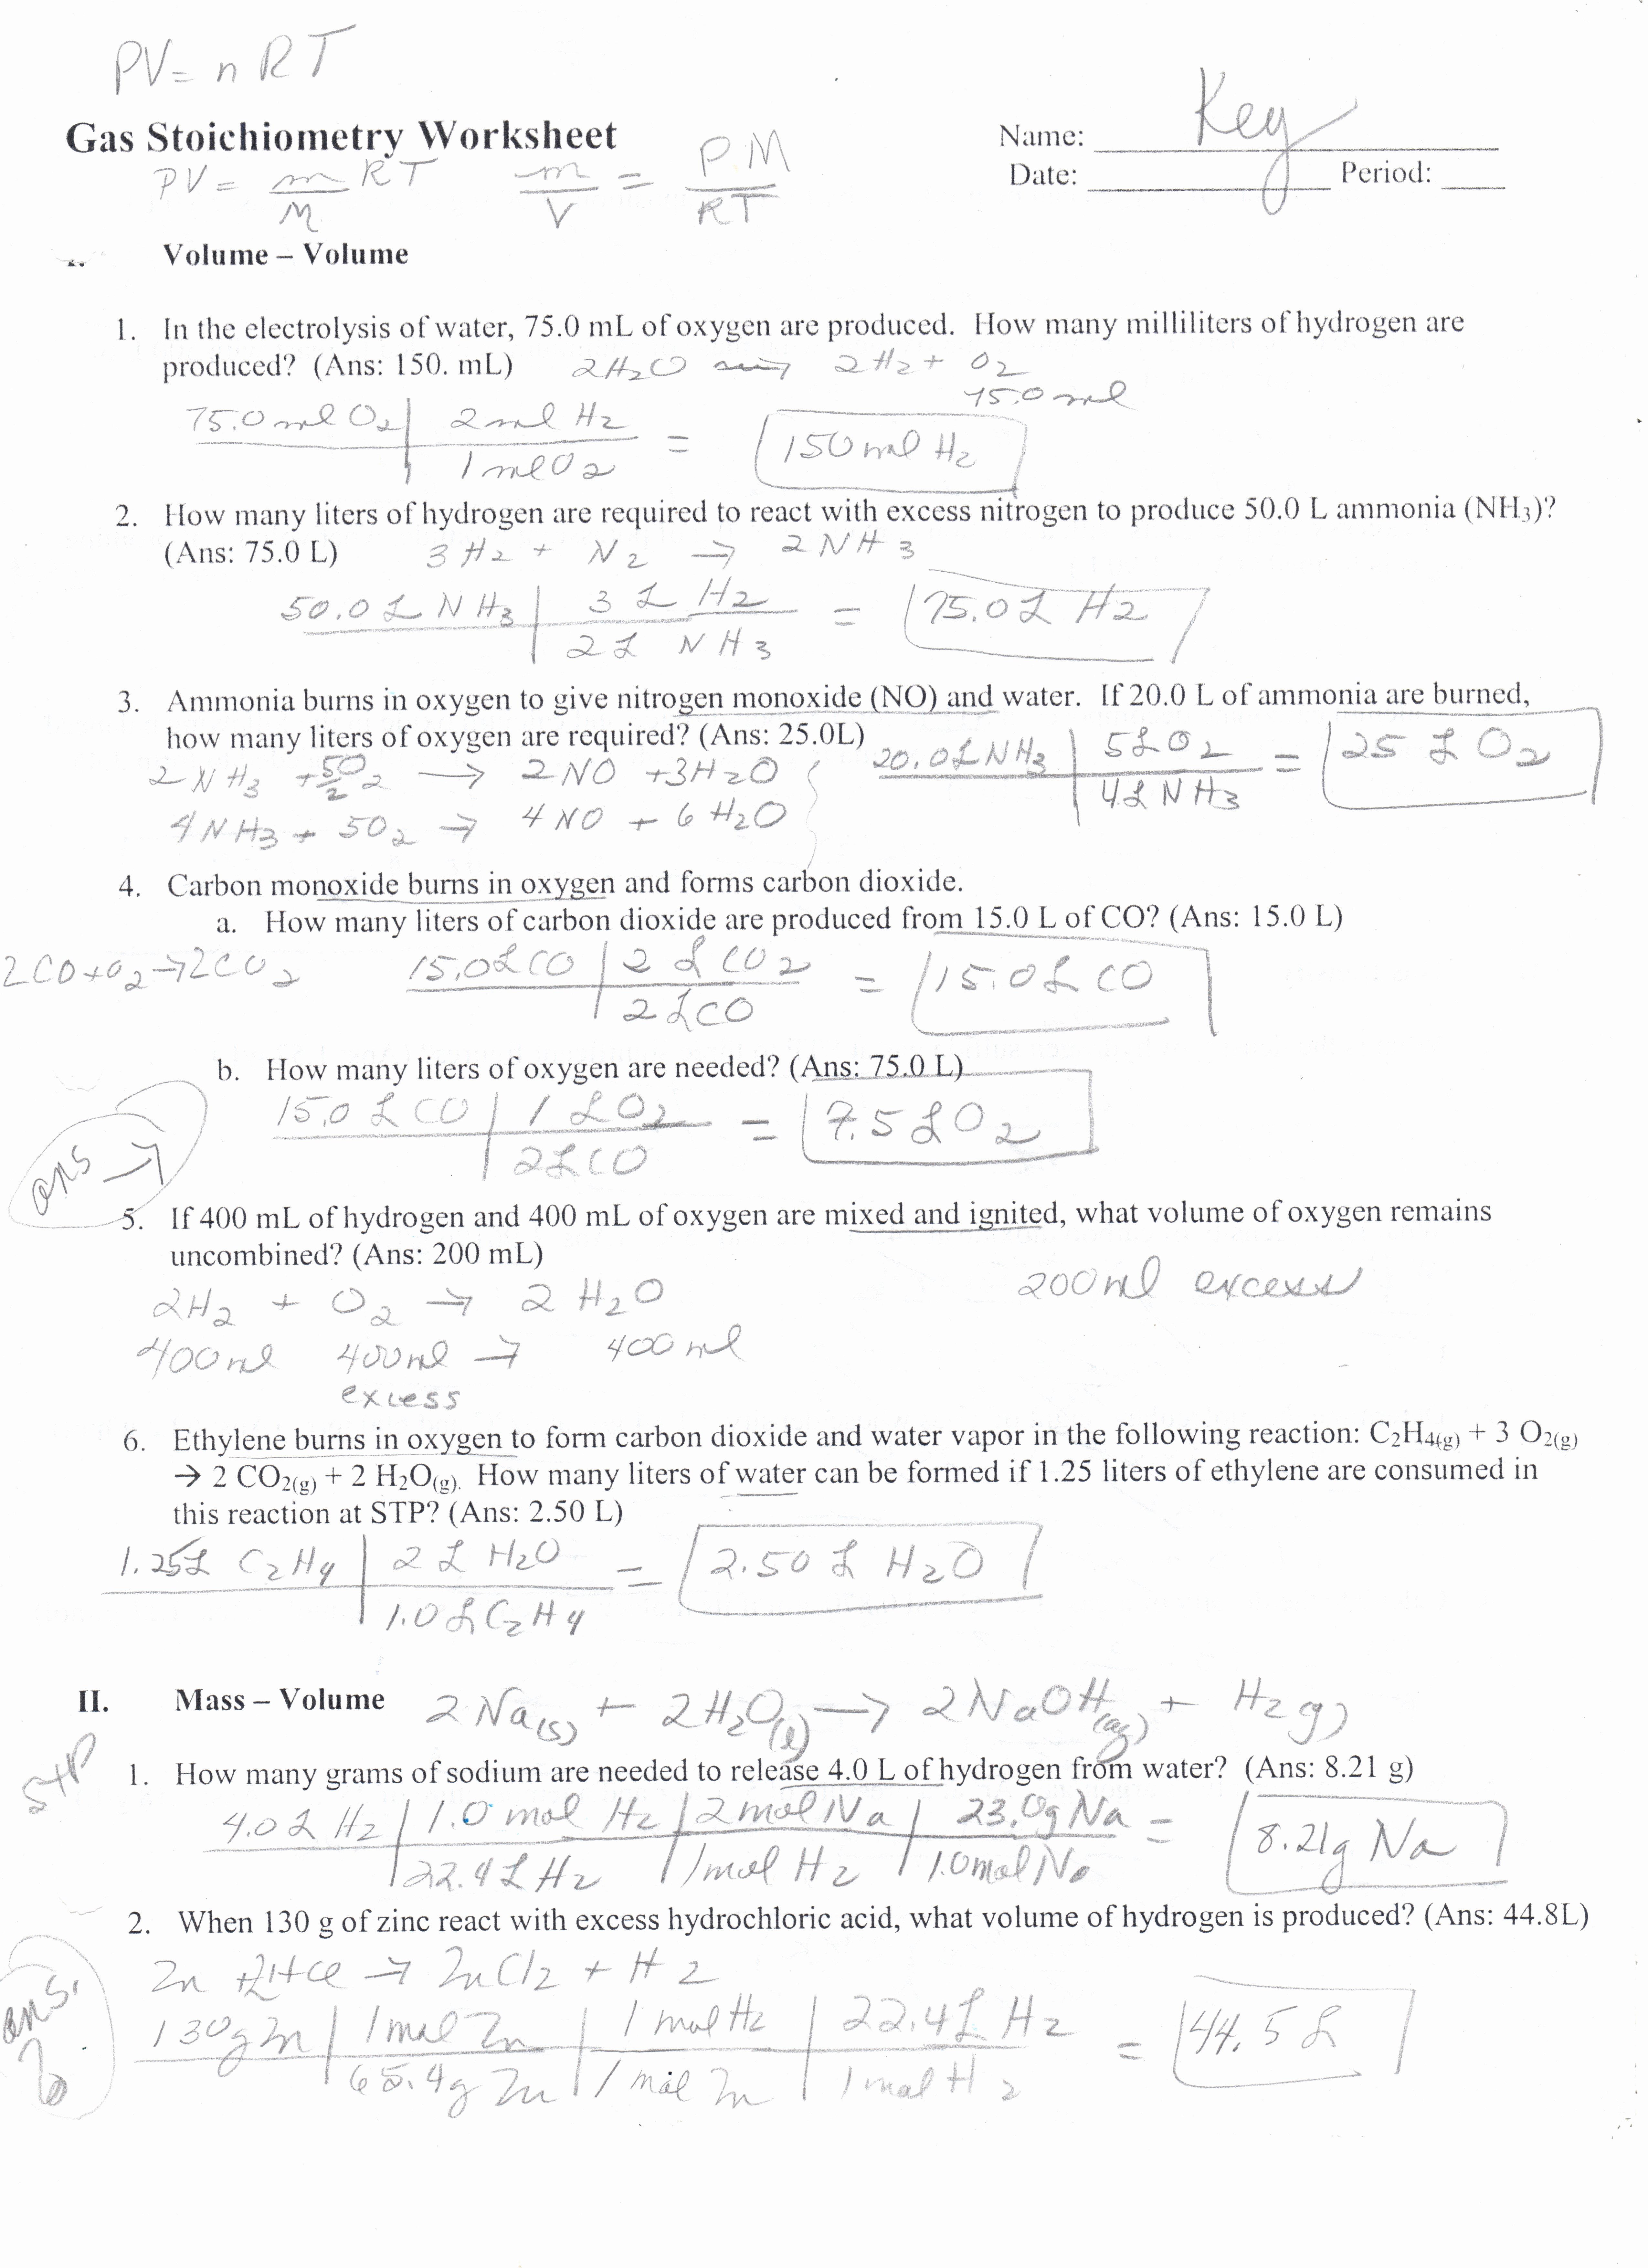 Worksheet for Basic Stoichiometry Answer Beautiful Worksheet for Basic Stoichiometry Part 2 Answers